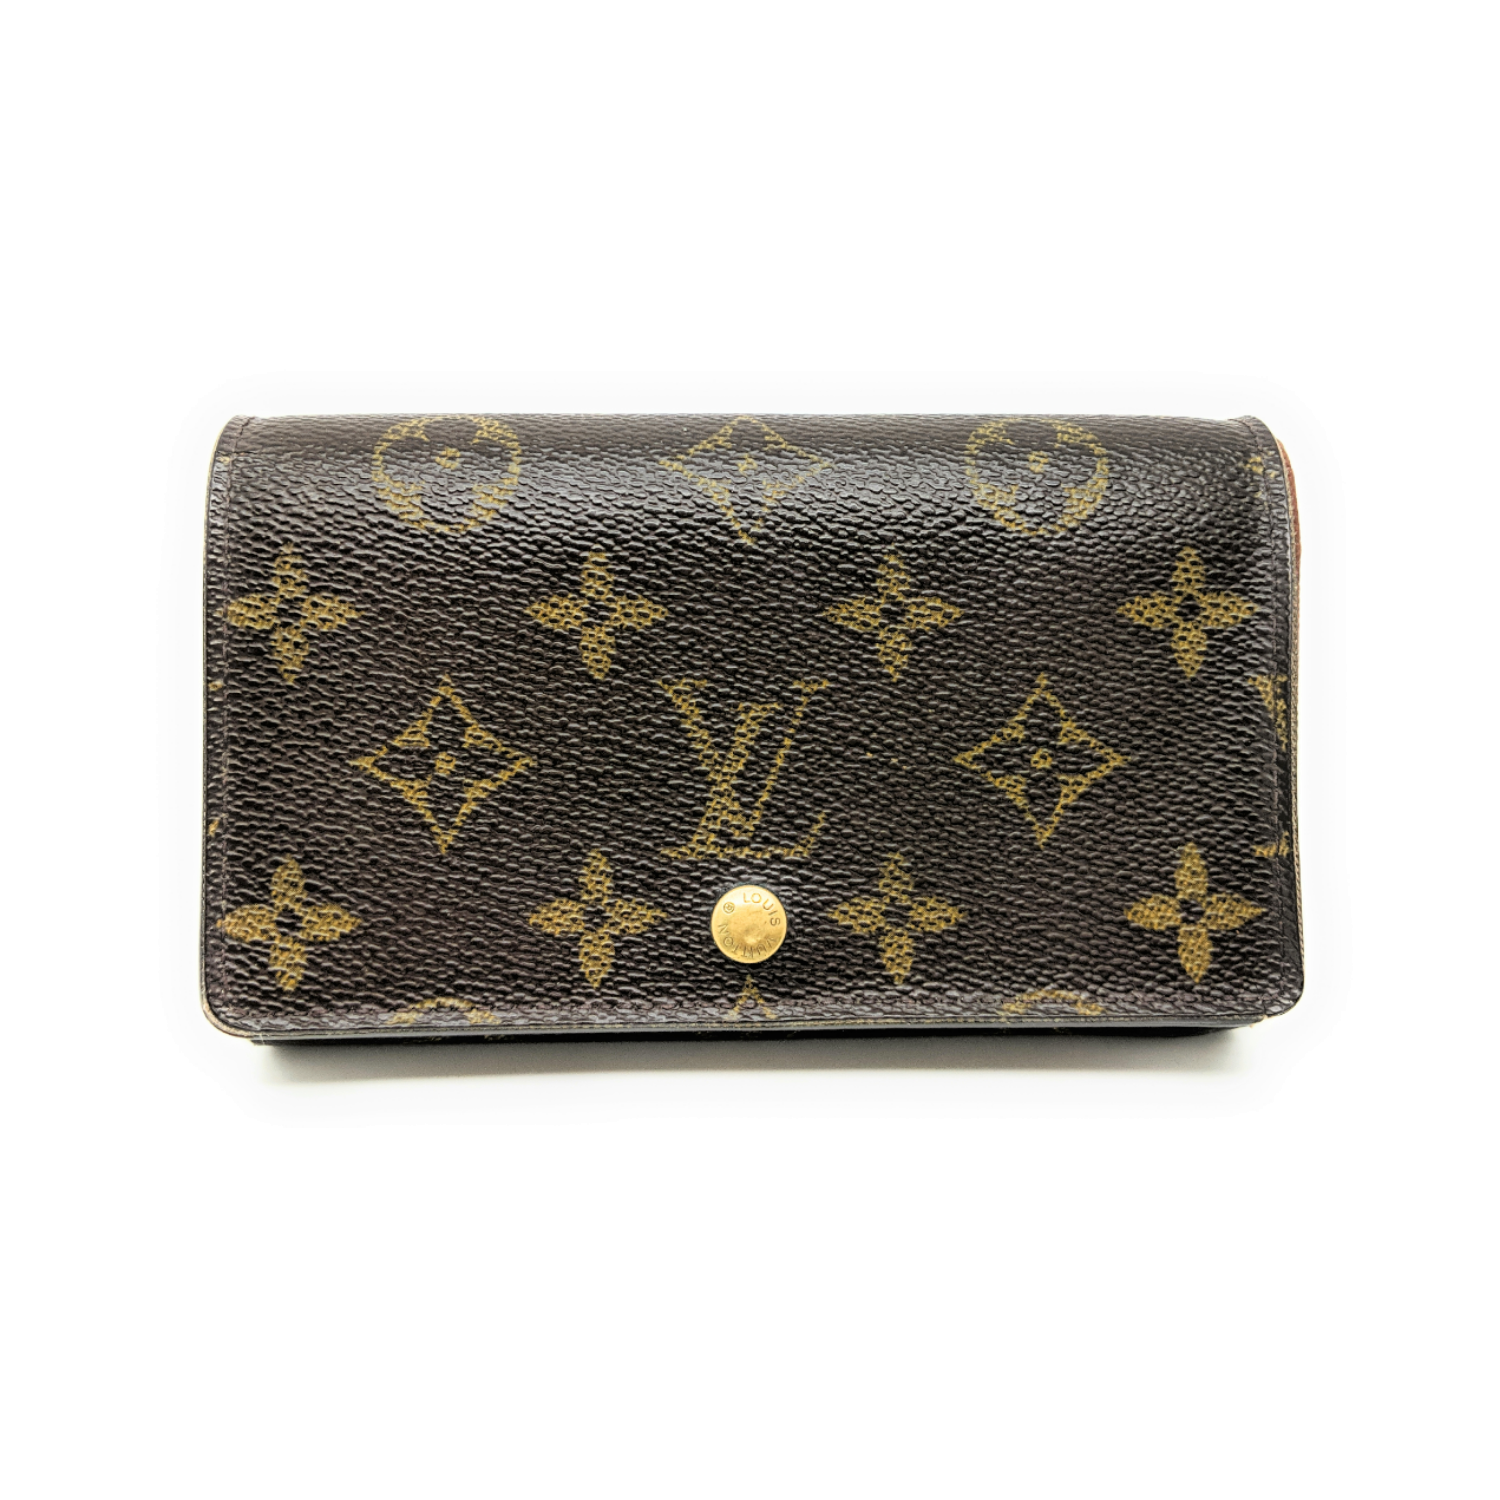 Vintage Louis Vuitton Monogram Porte Tresor Wallet